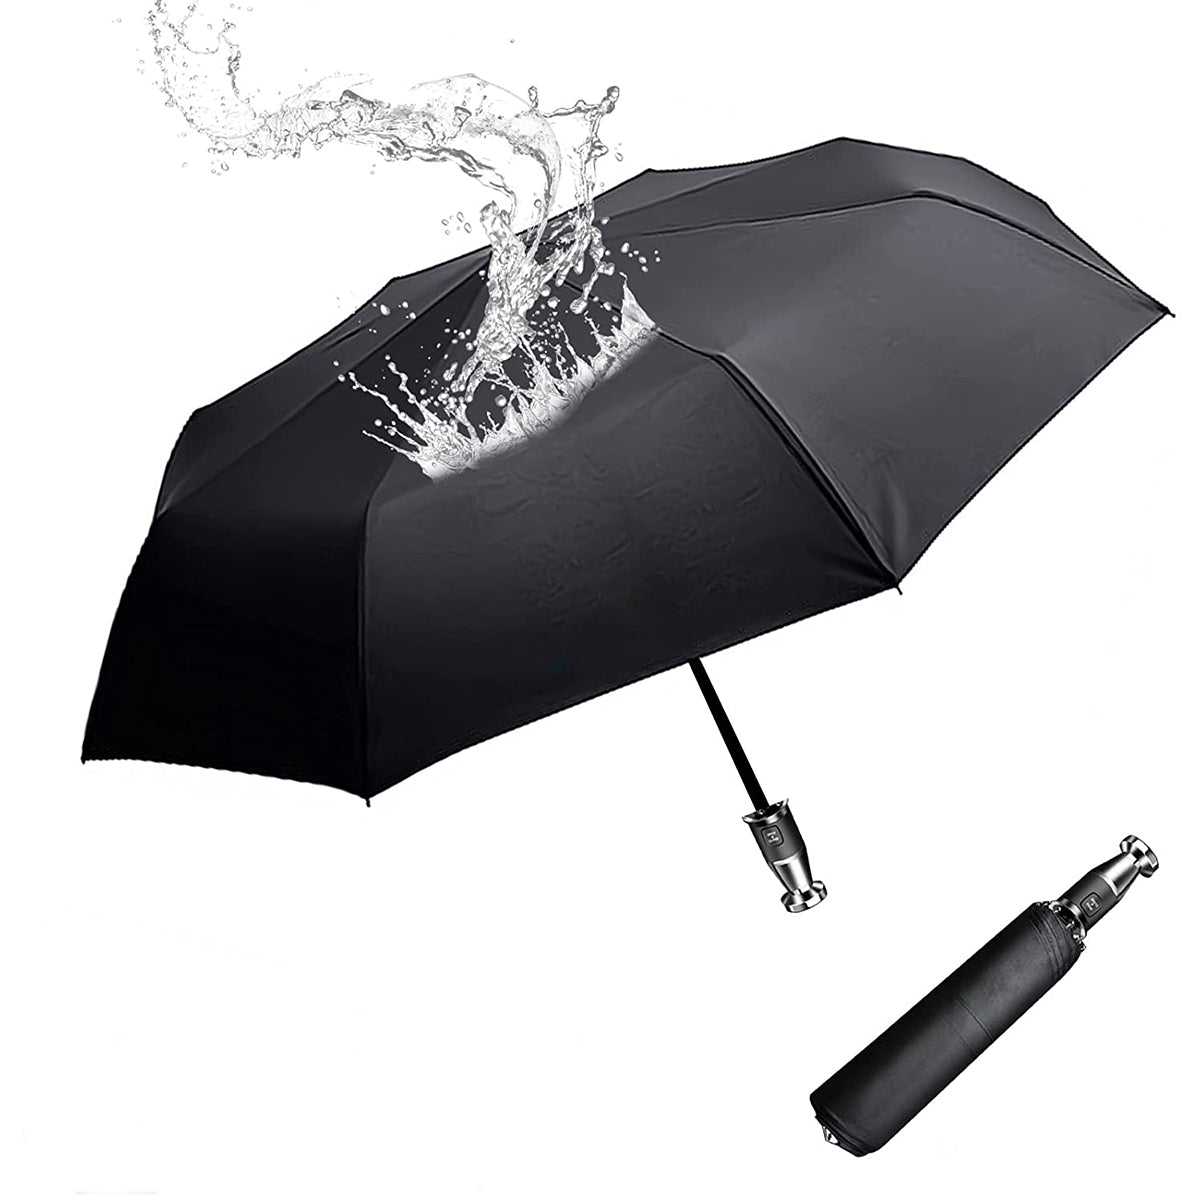 Umbrella for All Cars, 10 Ribs Umbrella Windproof Automatic Folding Umbrella, One-handed use, Rain and Sun Protection, Car Accessories UE13993